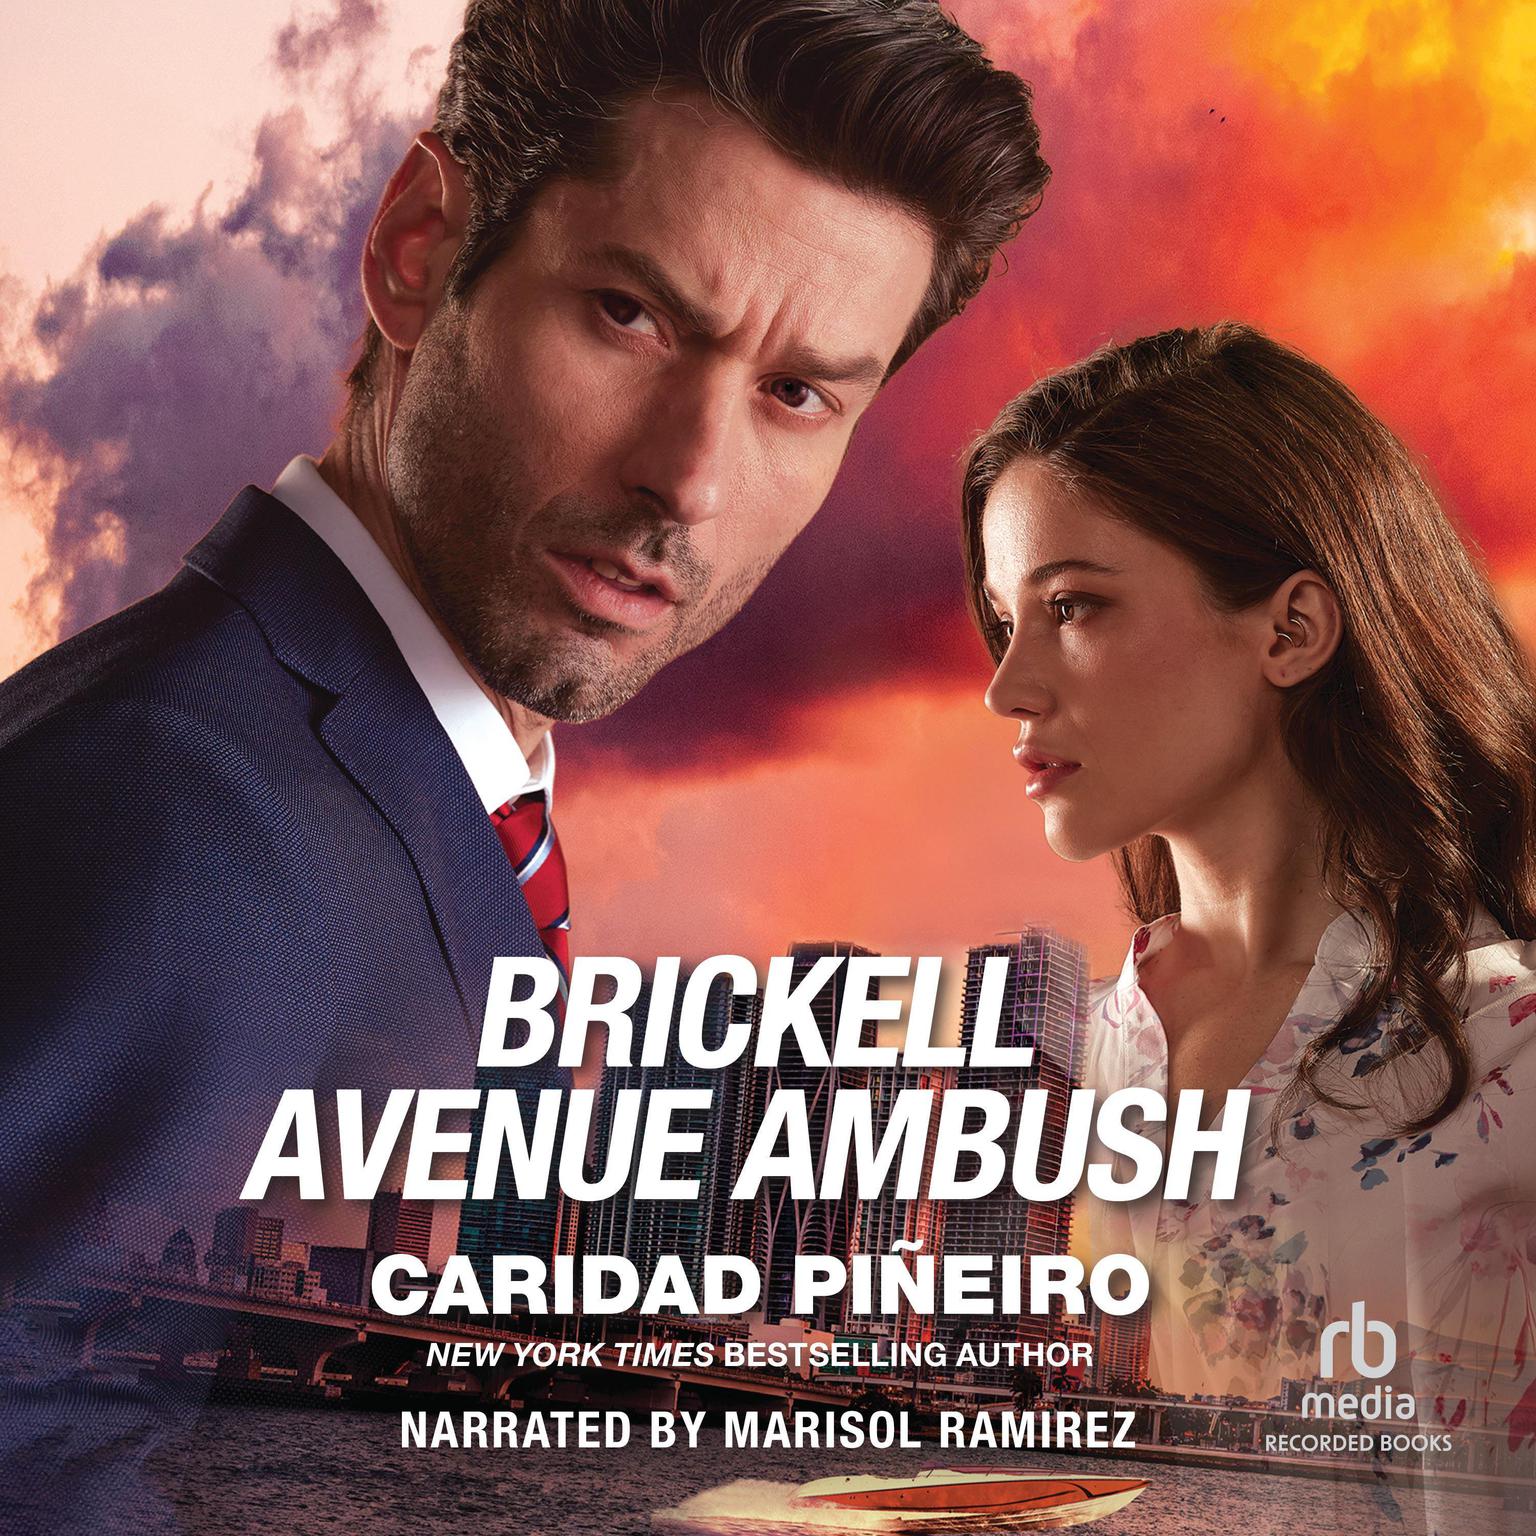 Brickell Avenue Ambush Audiobook, by Caridad Pineiro